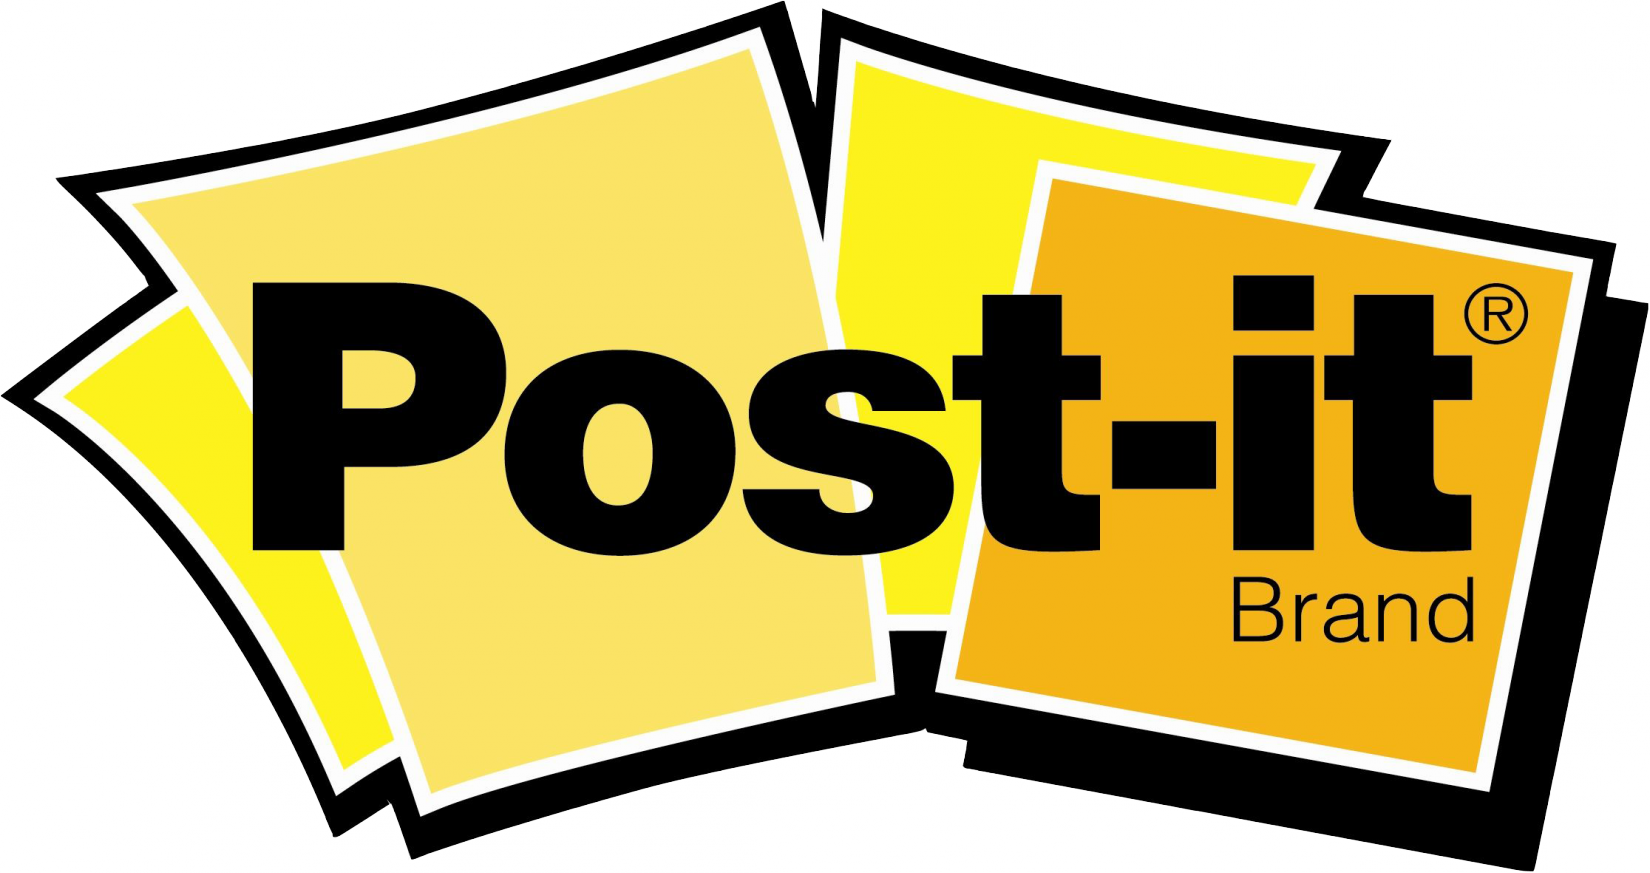 Post It